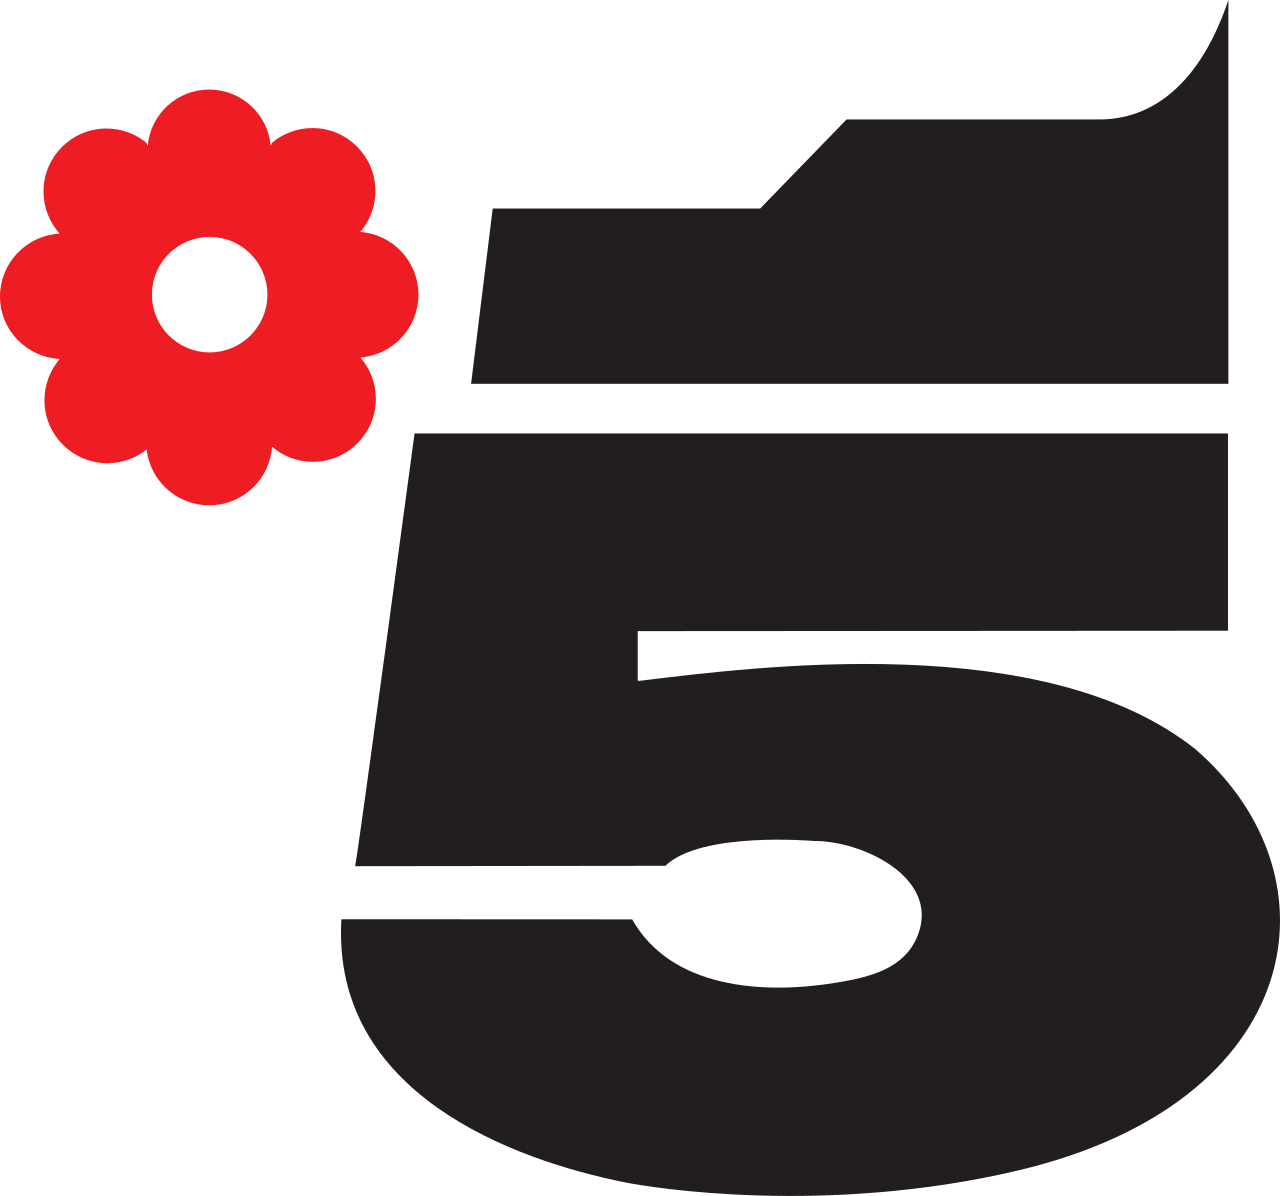 Пятерка тв. Canale 5. Телекомпании Mediaset 5. Tv5 logo. 1989 Логотип.